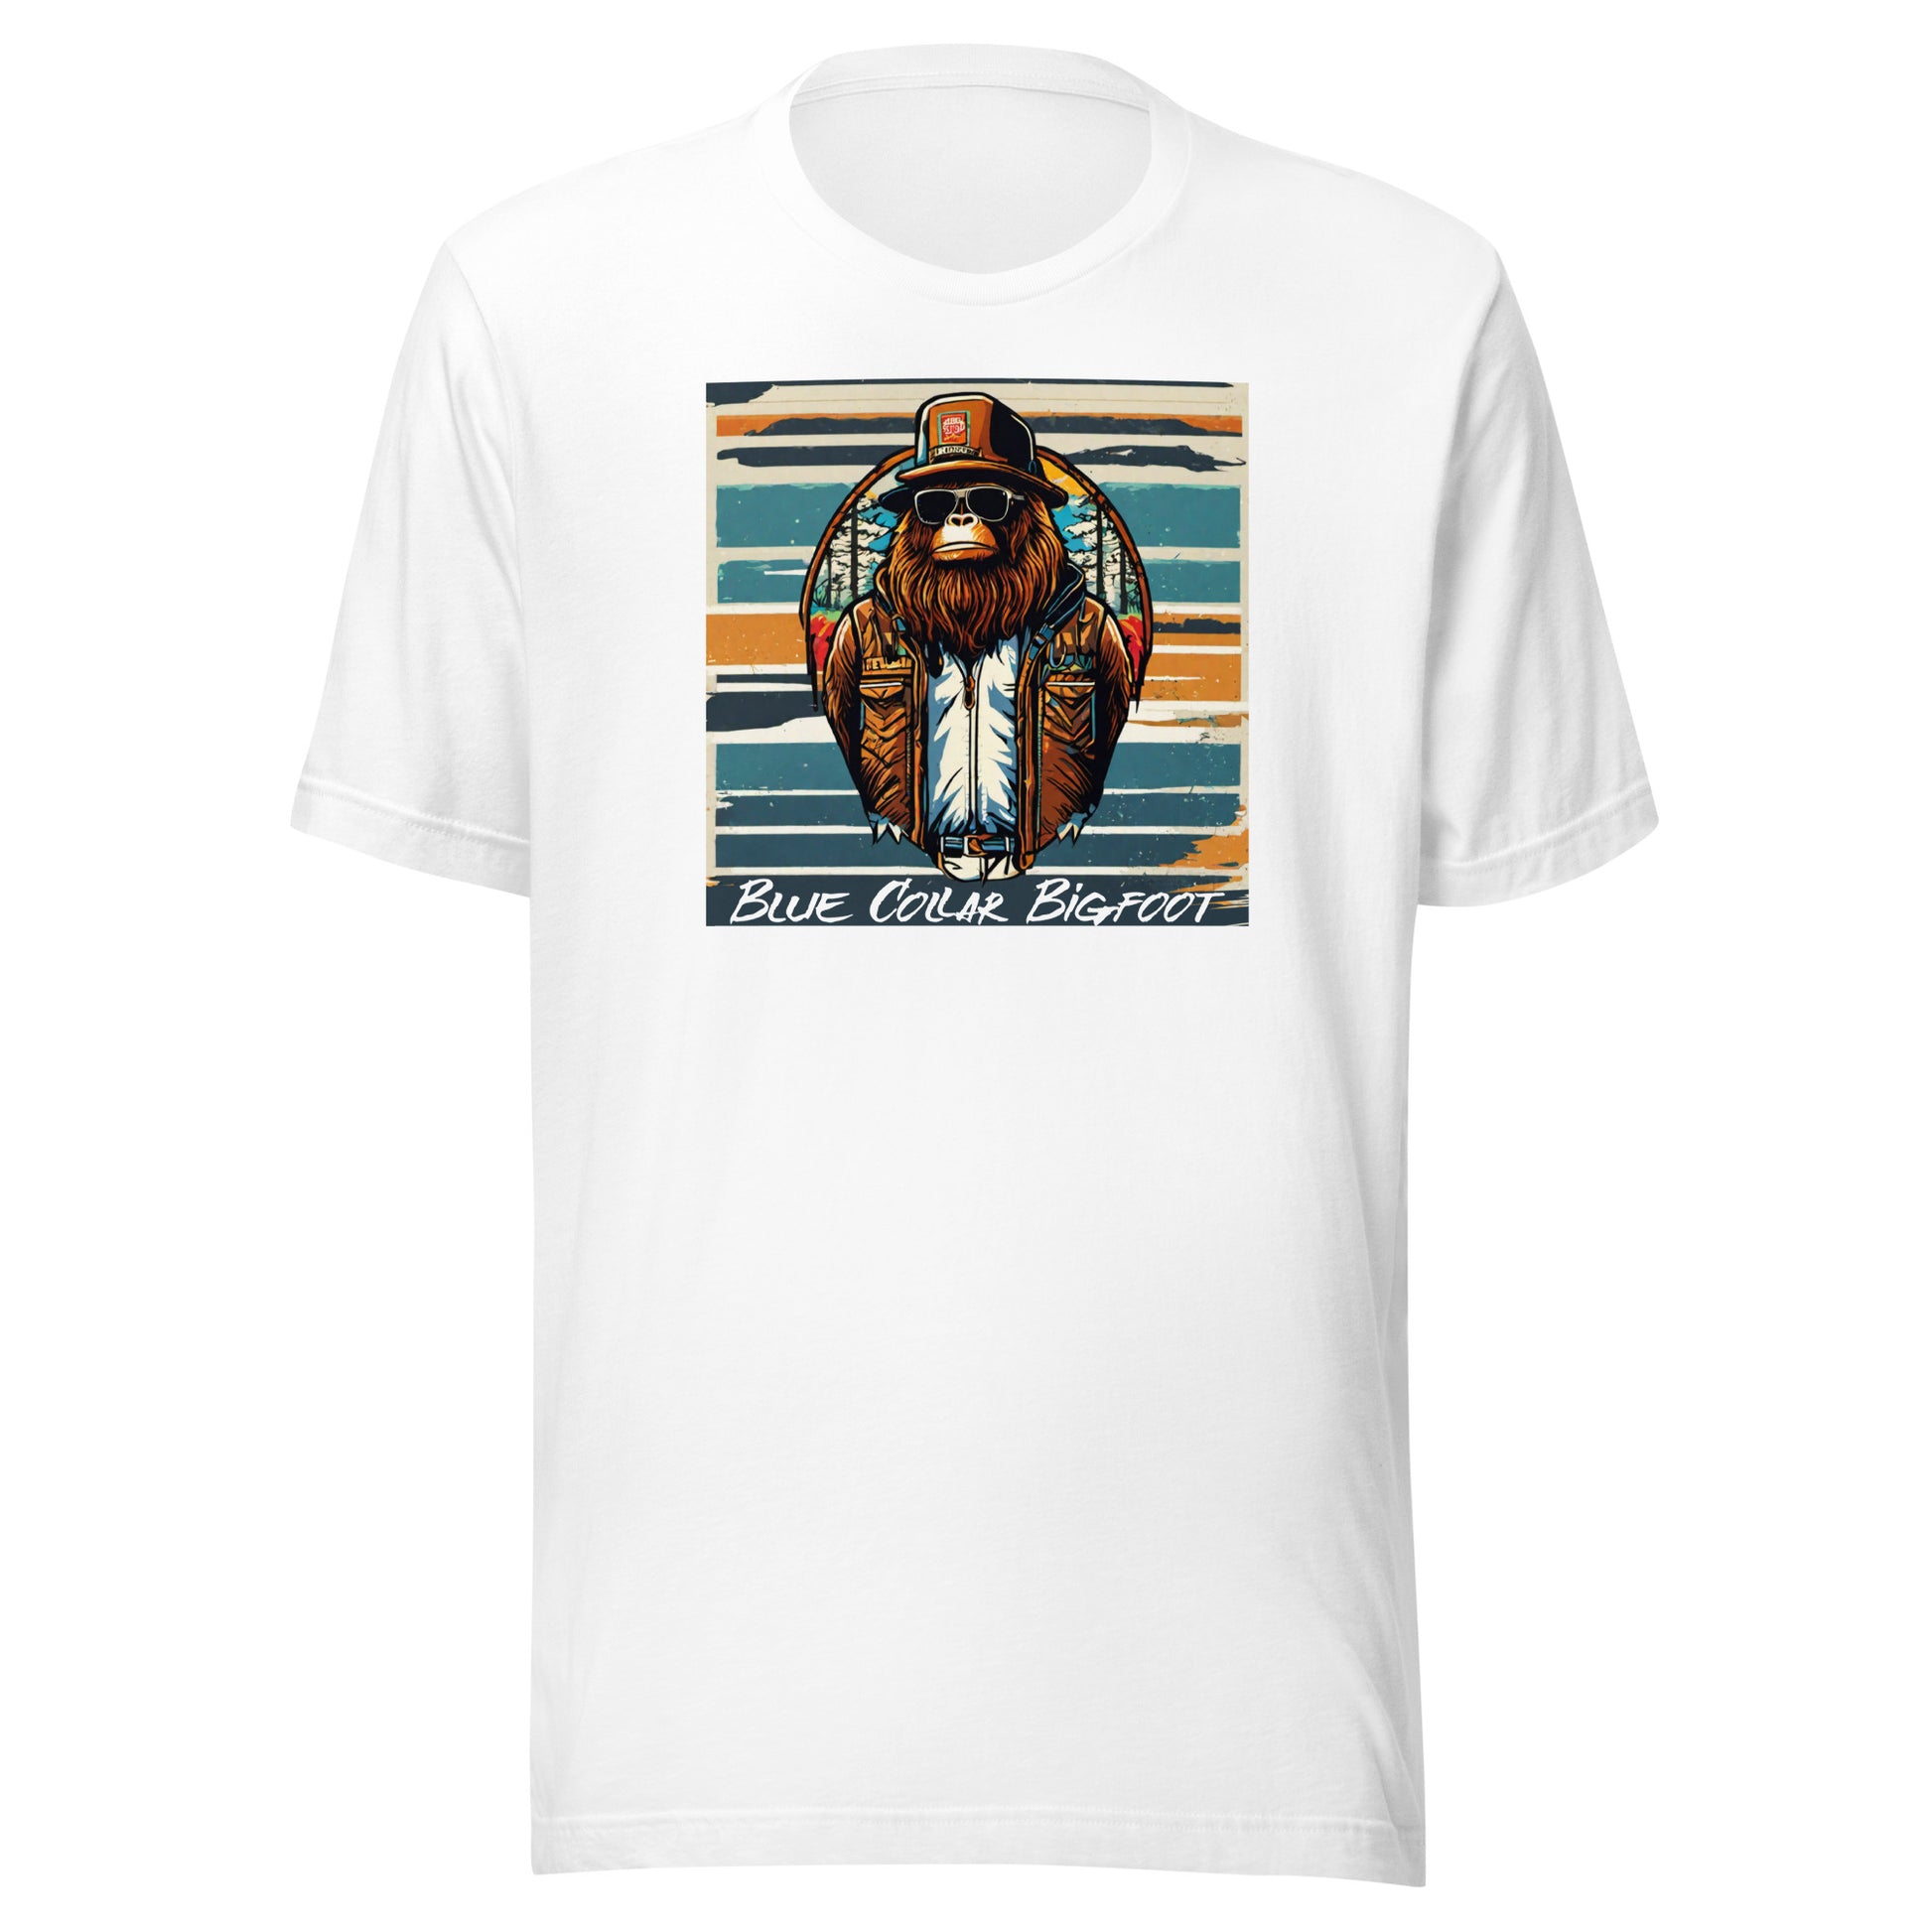 Blue-Collar Bigfoot Men's Graphic T-Shirt White